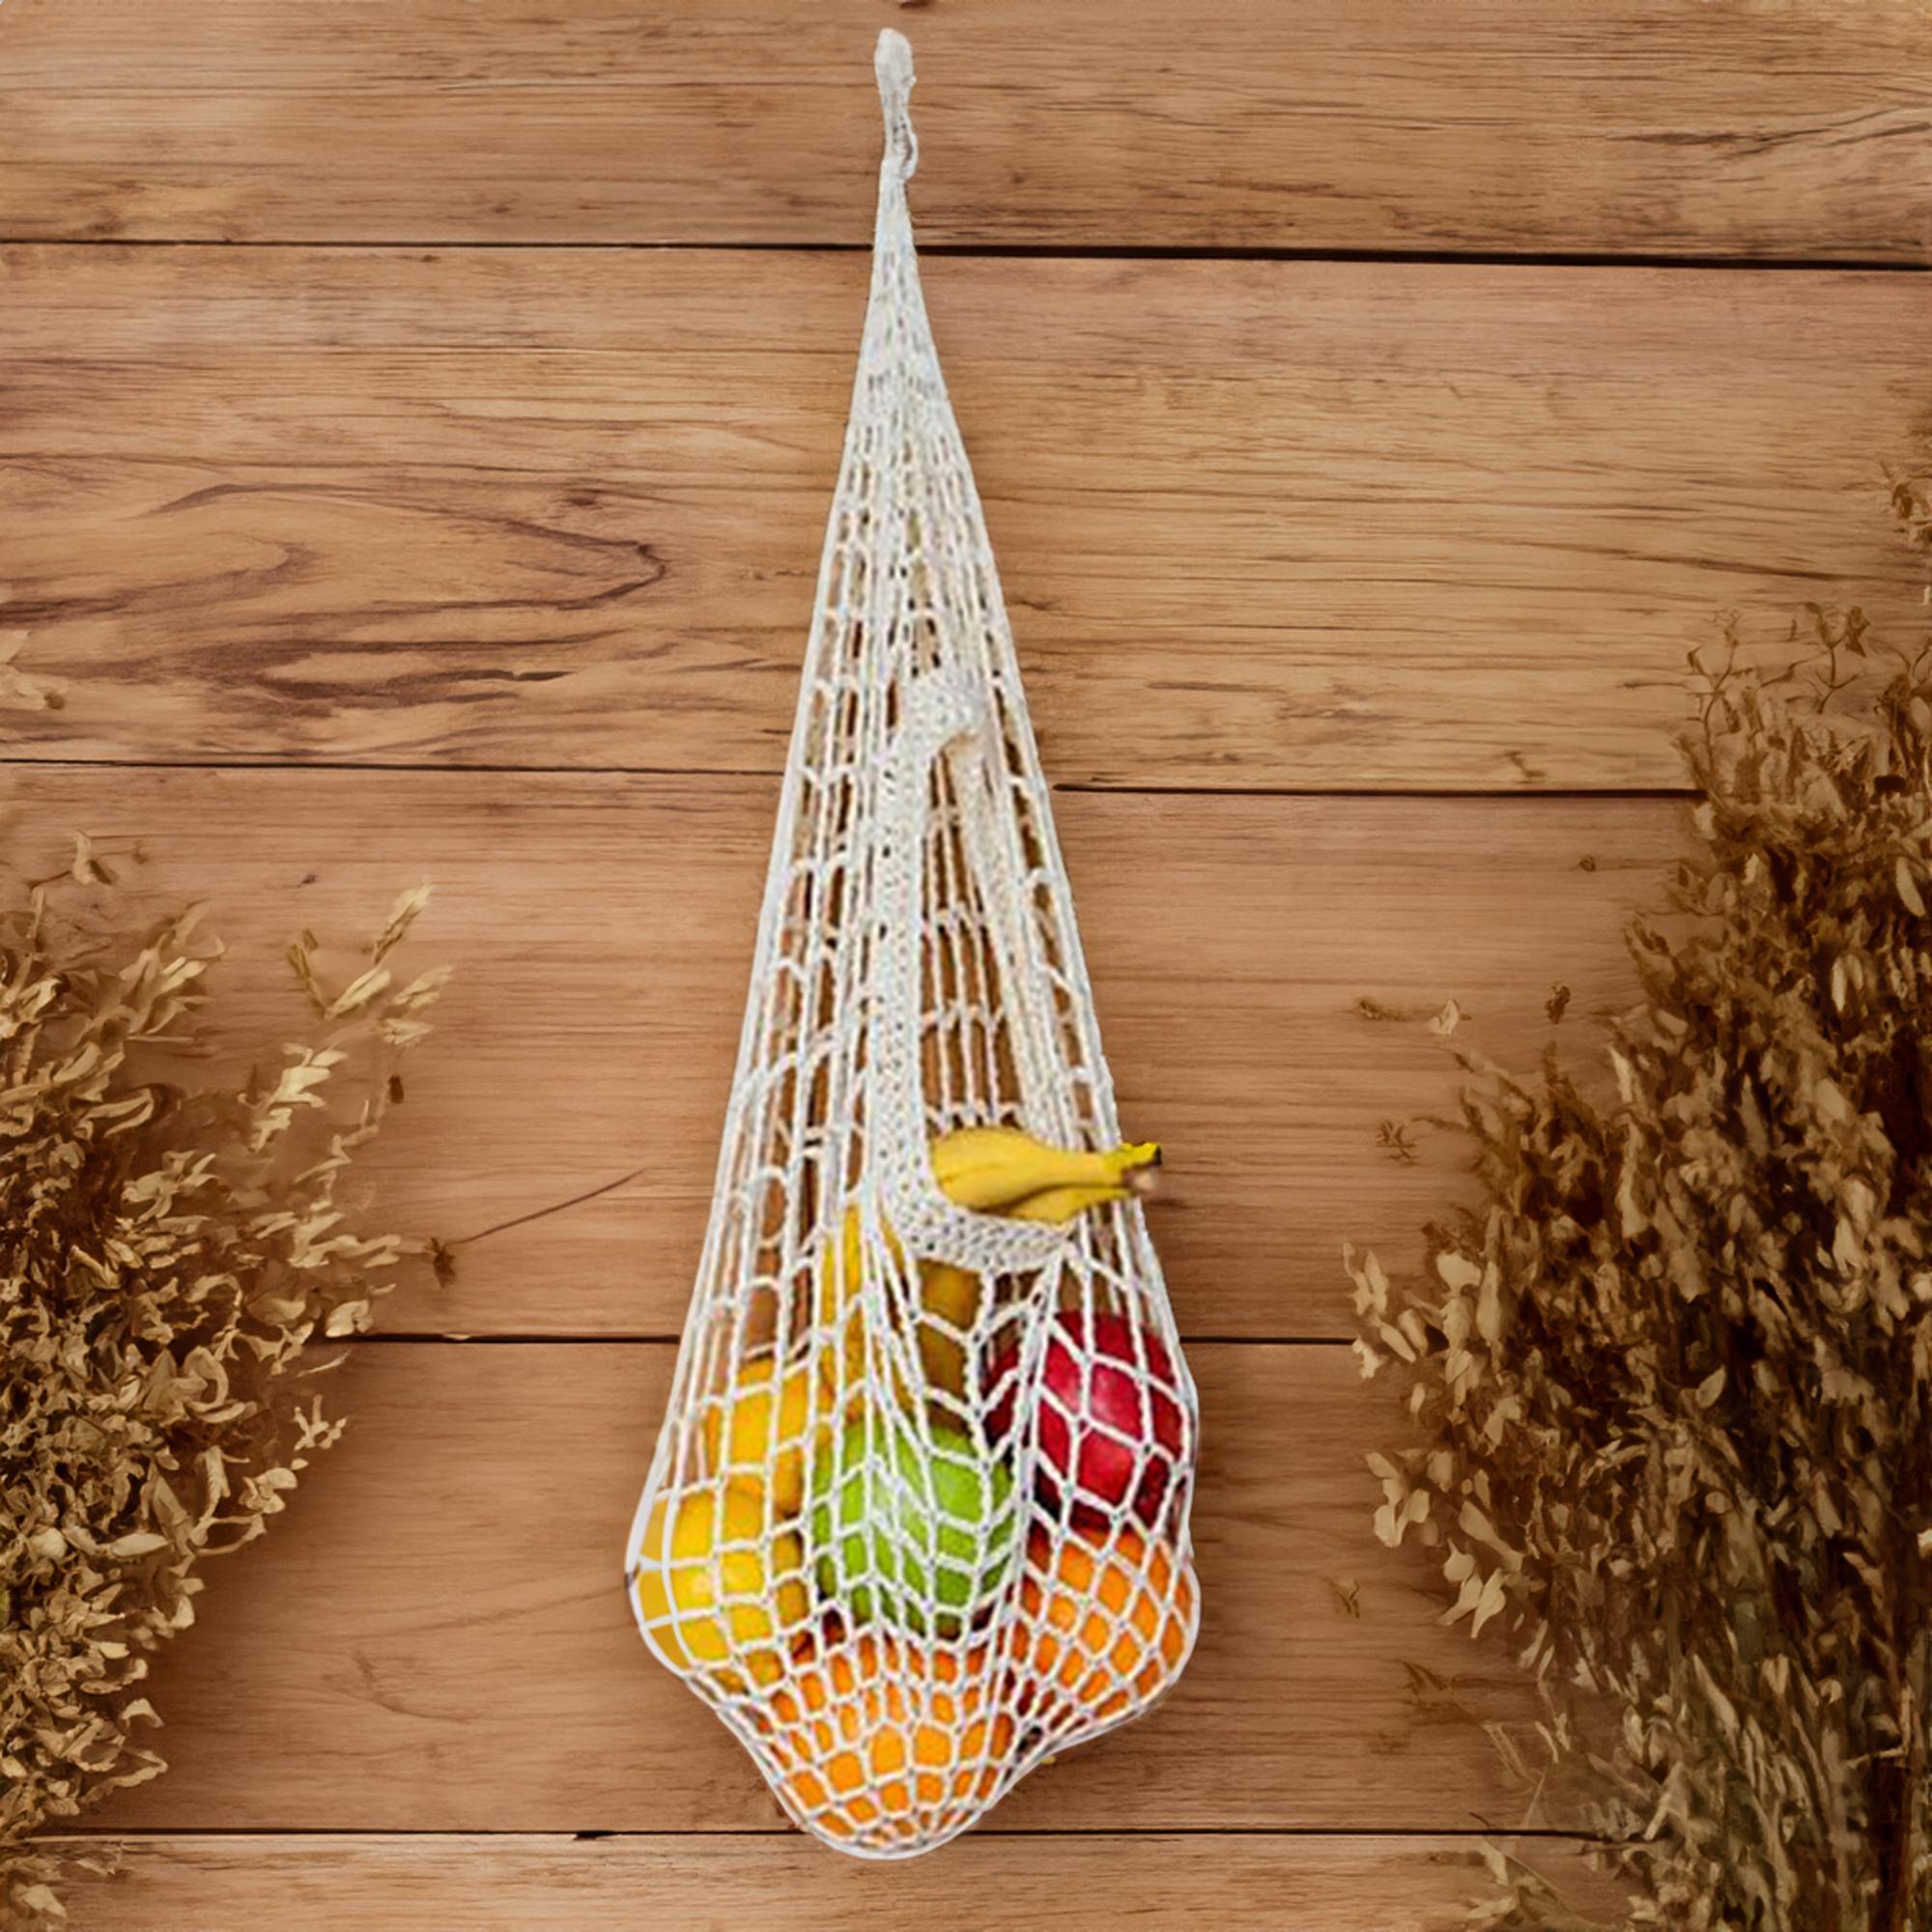 Hanging Produce Net